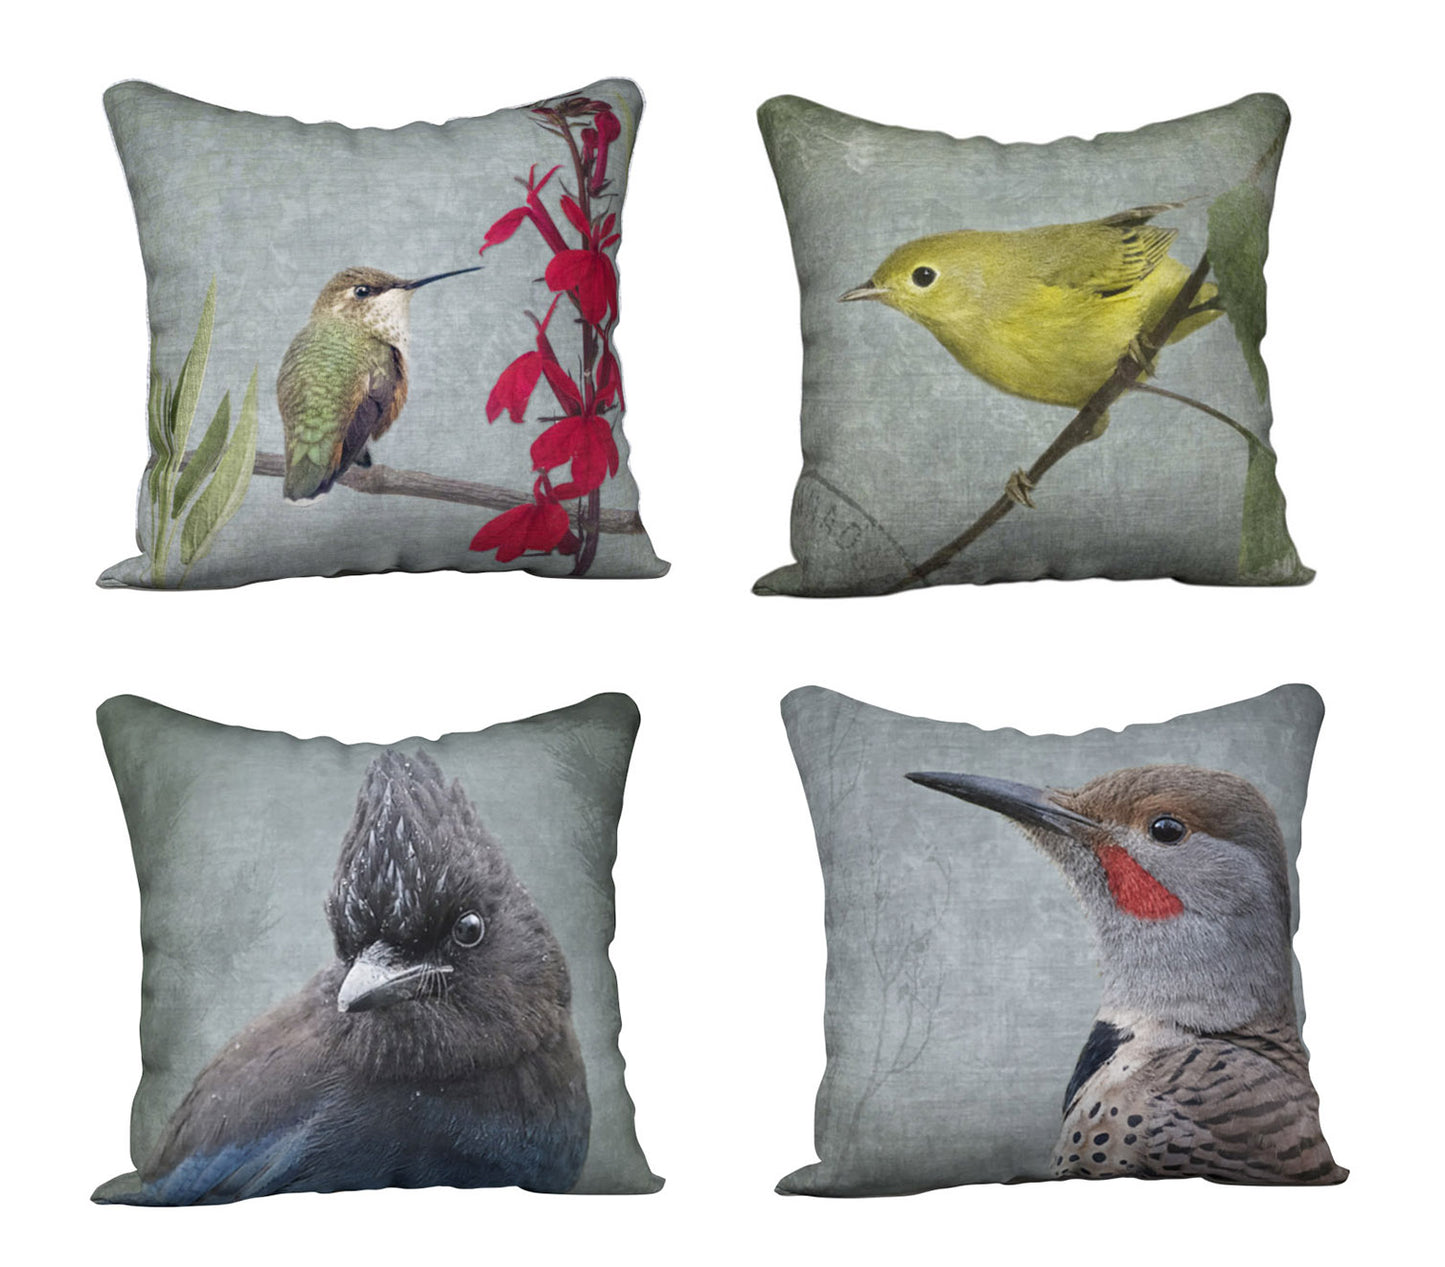 ORANGE CROWNED WARBLER — Bird Cushion Cover